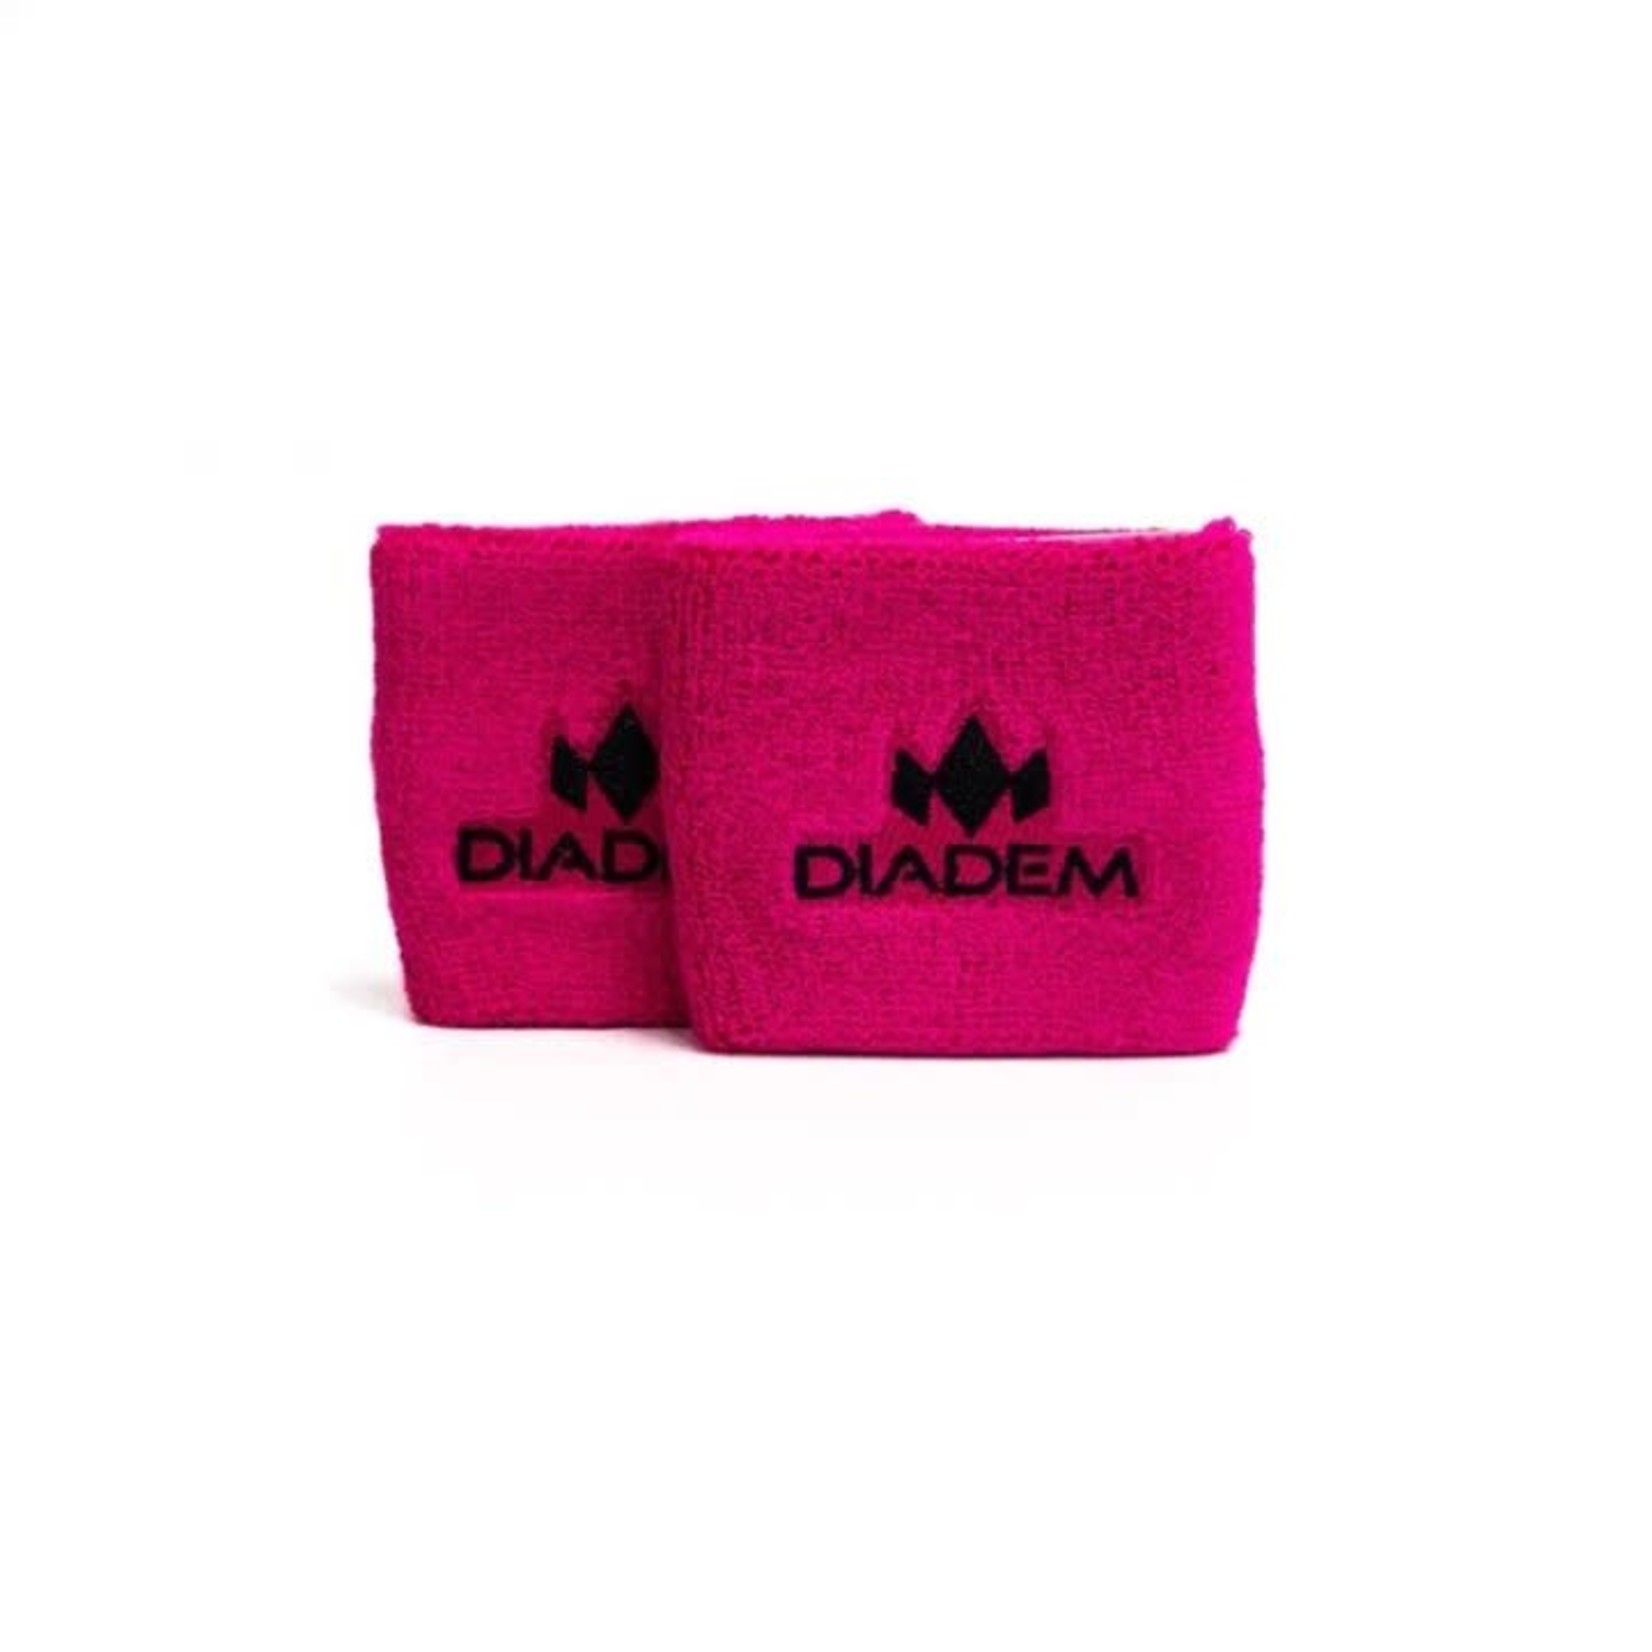 Diadem Sports Diadem 2-Pack Wristbands 2.75"